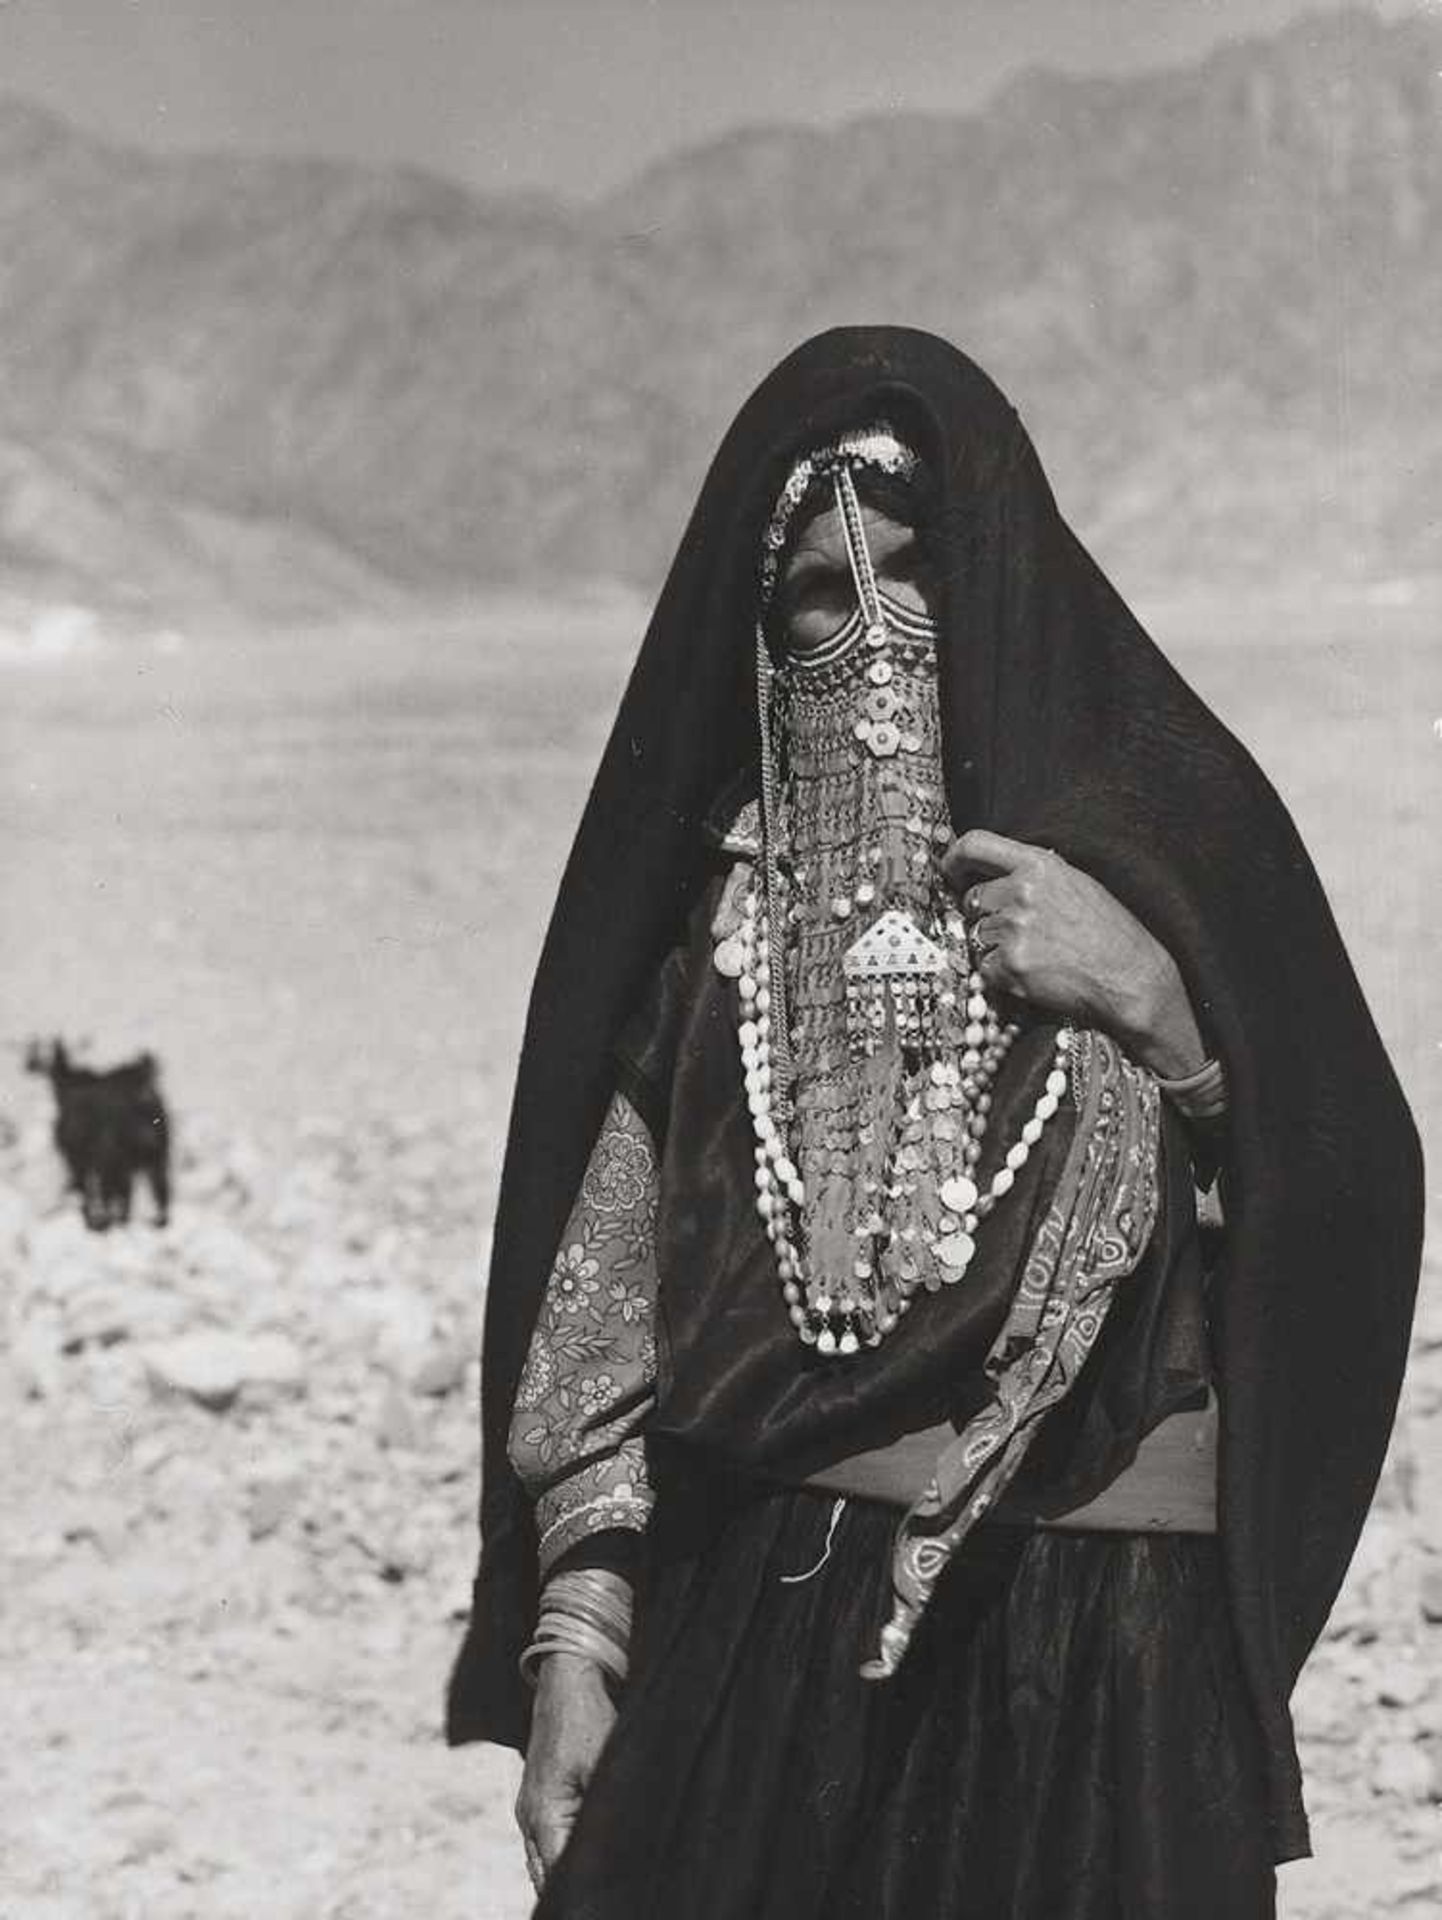 Shamir, Marli: Bedouin woman in SinaiBedouin woman in Sinai. 1950s. Vintage ferrotyped gelatin